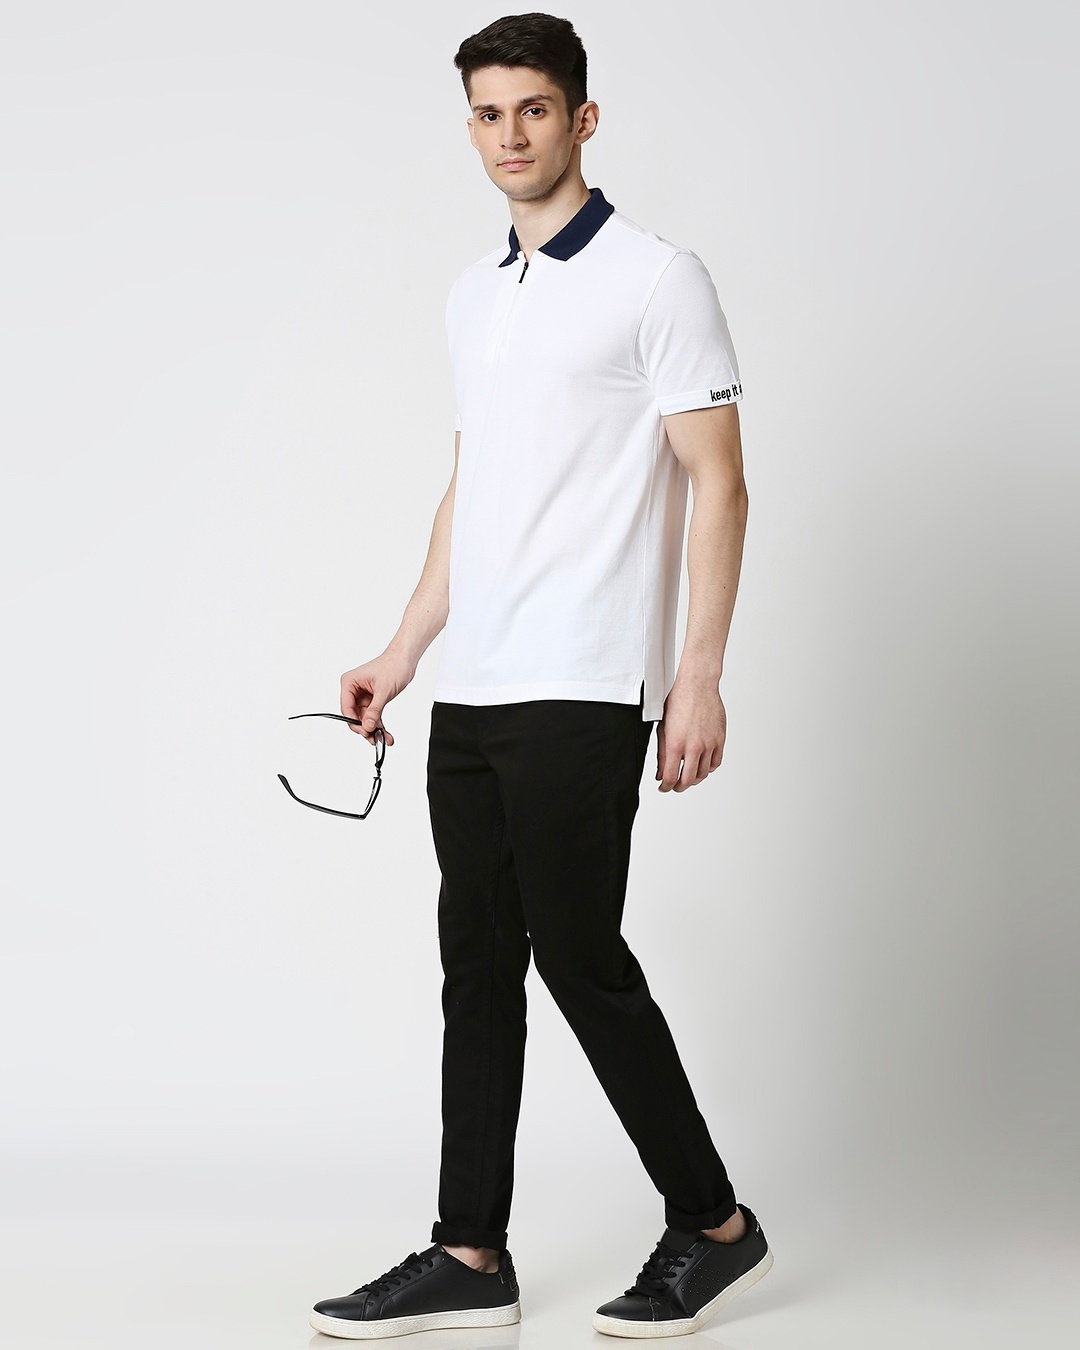 Buy White Half Sleeve Contrast Zipper Polo Online at Bewakoof